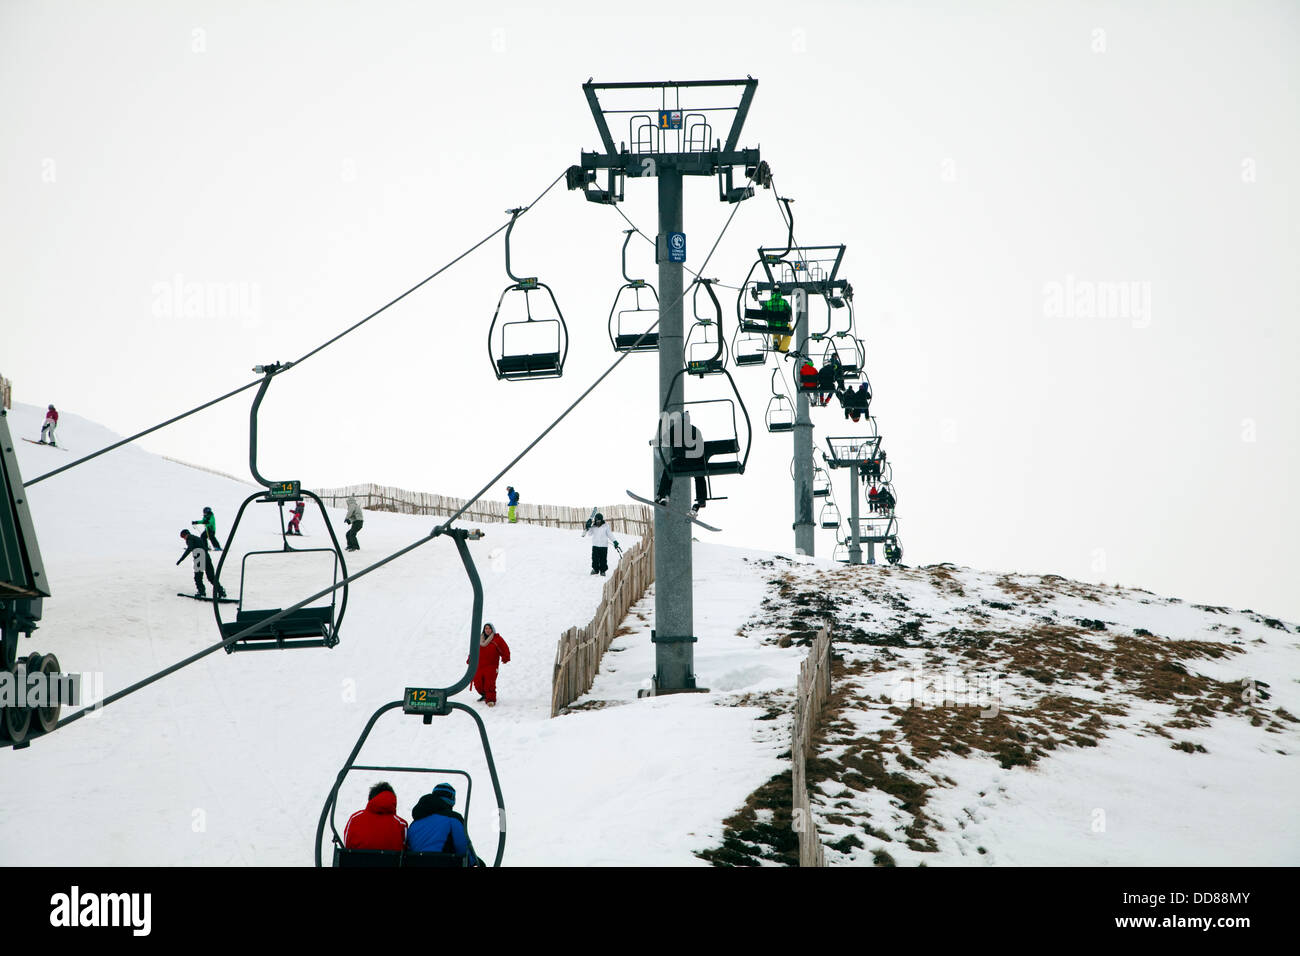 Glenshee, Scotland - February 3rd, 2013: People using the ski lifts and runs at the ski area in Glenshee, Scotland. Stock Photo